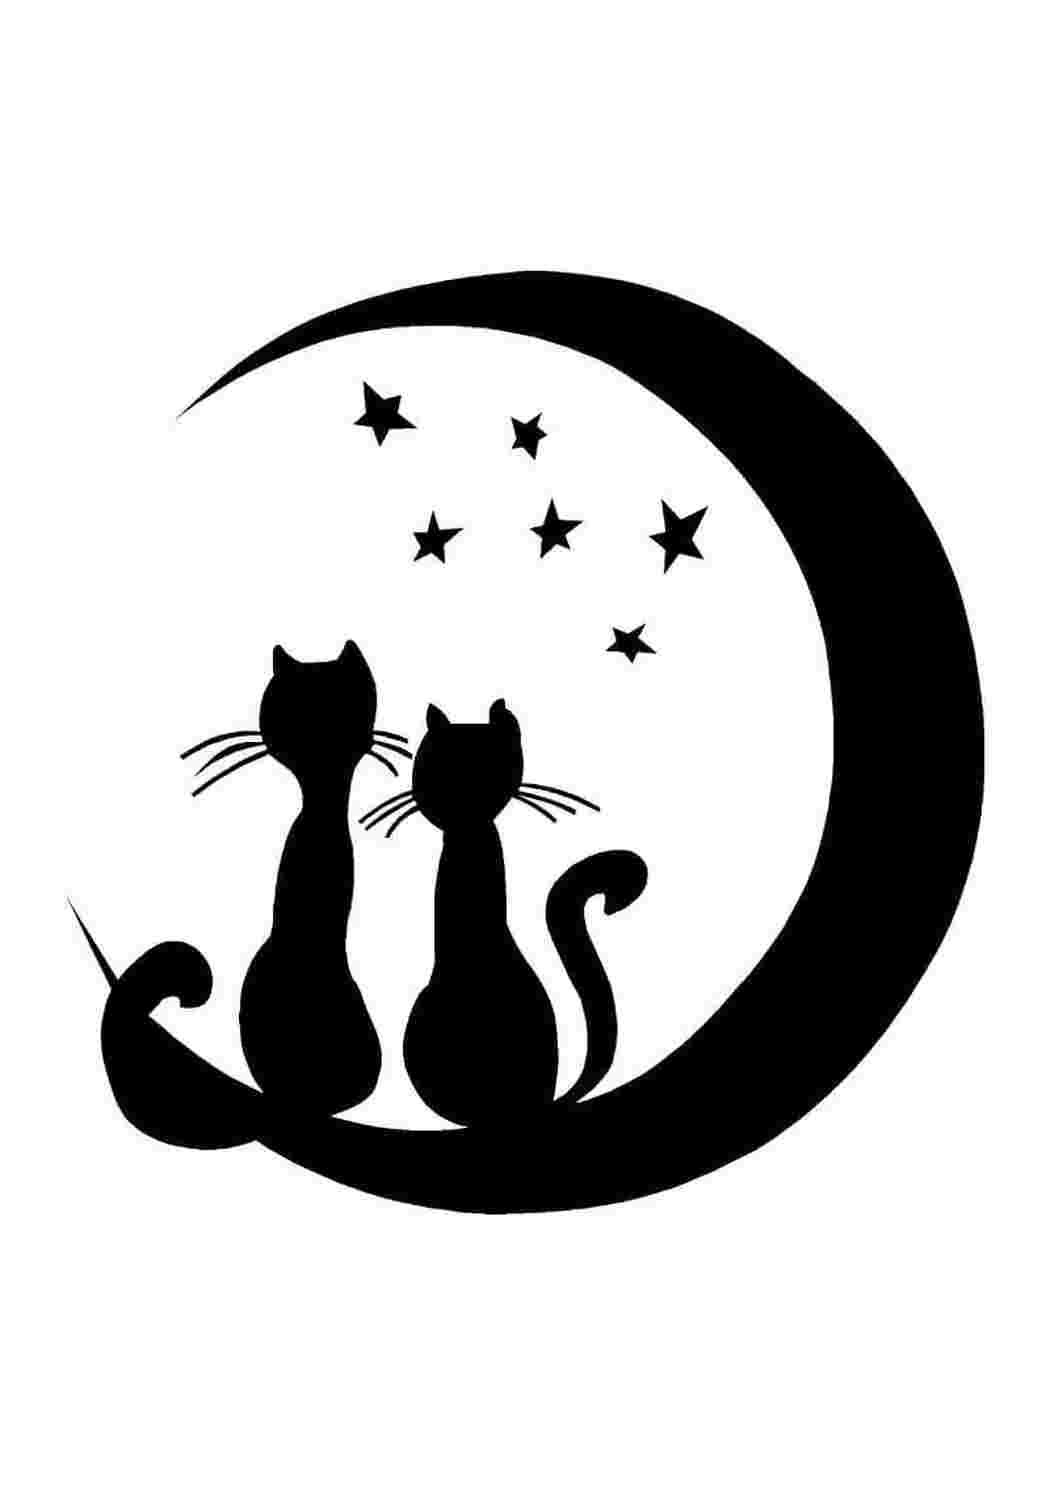 Трафареты кошек для тату, мехенди и дизайна интерьера, 51 трафарет